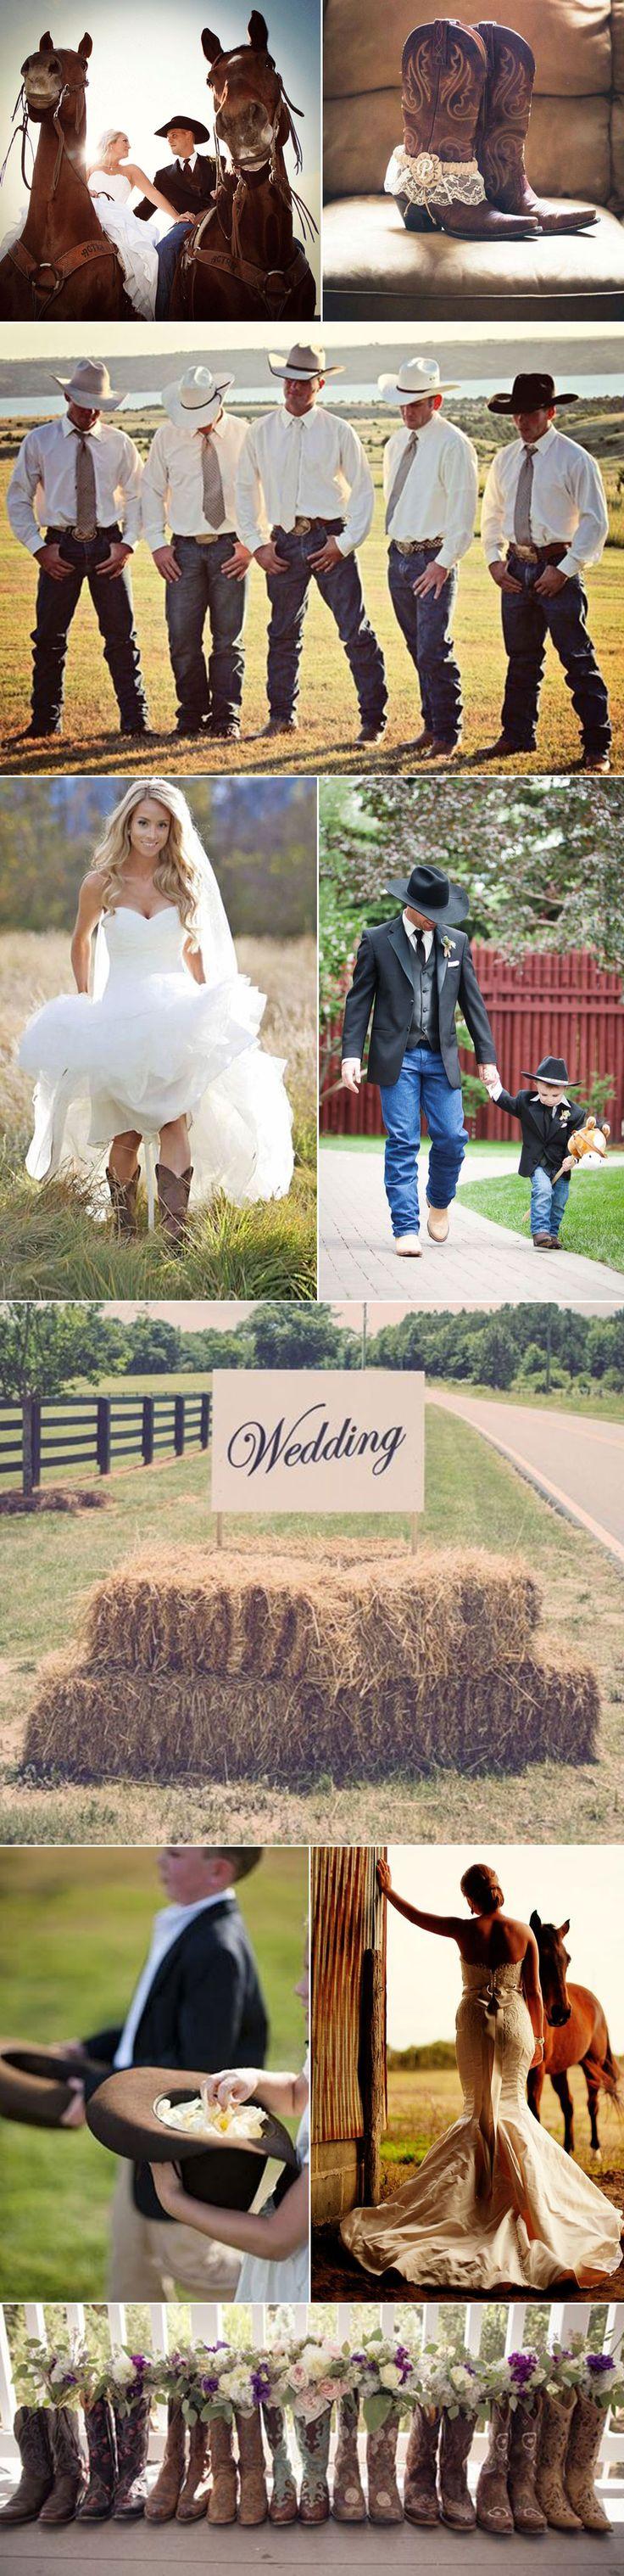 Свадьба - Inspiration For Country Western Weddings   